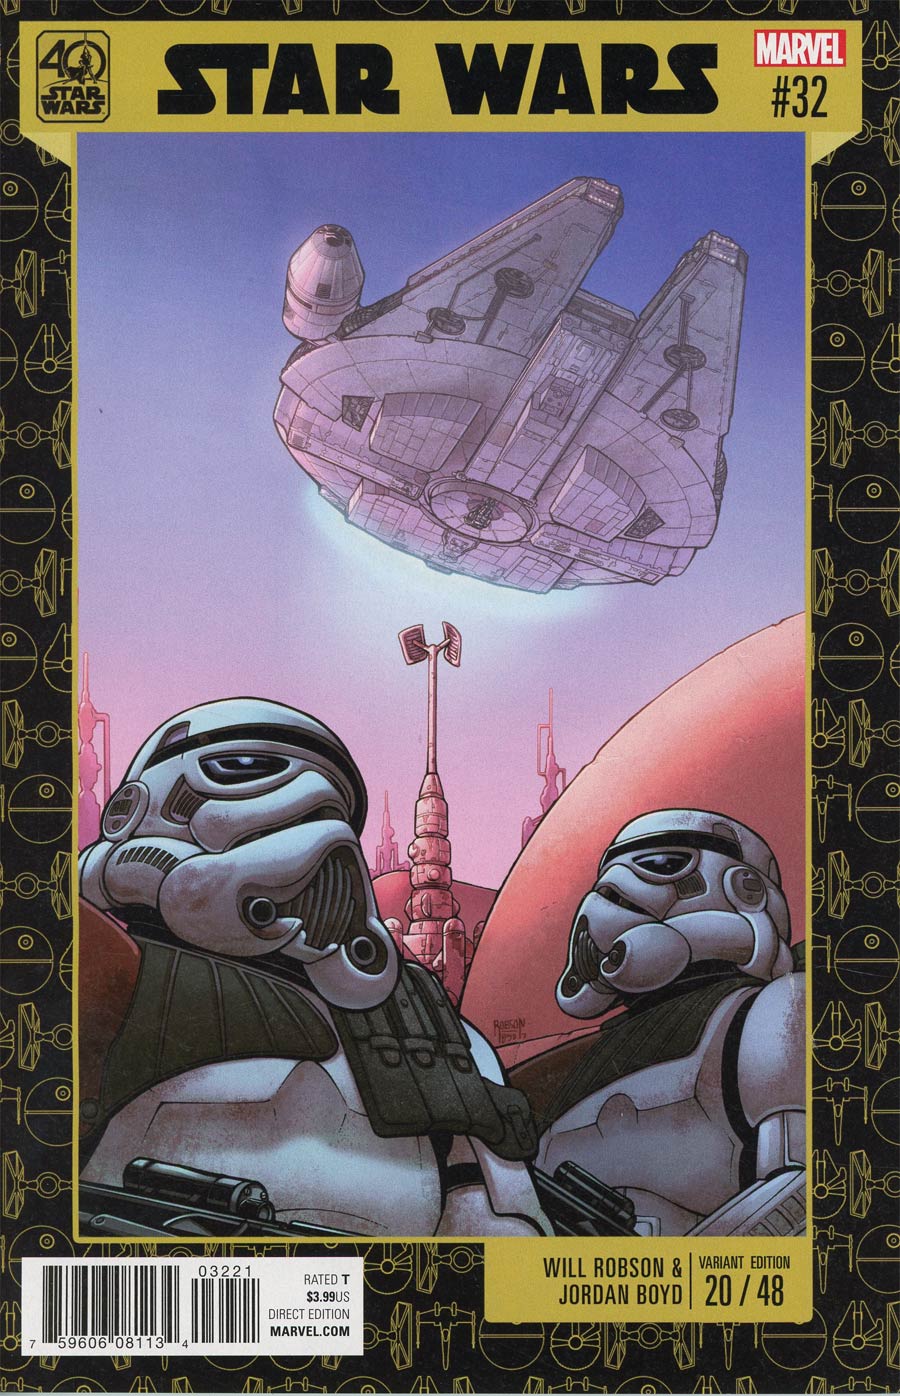 Star Wars Vol 4 #32 Cover B Variant Will Robson Star Wars 40th Anniversary Cover (Screaming Citadel Part 4)